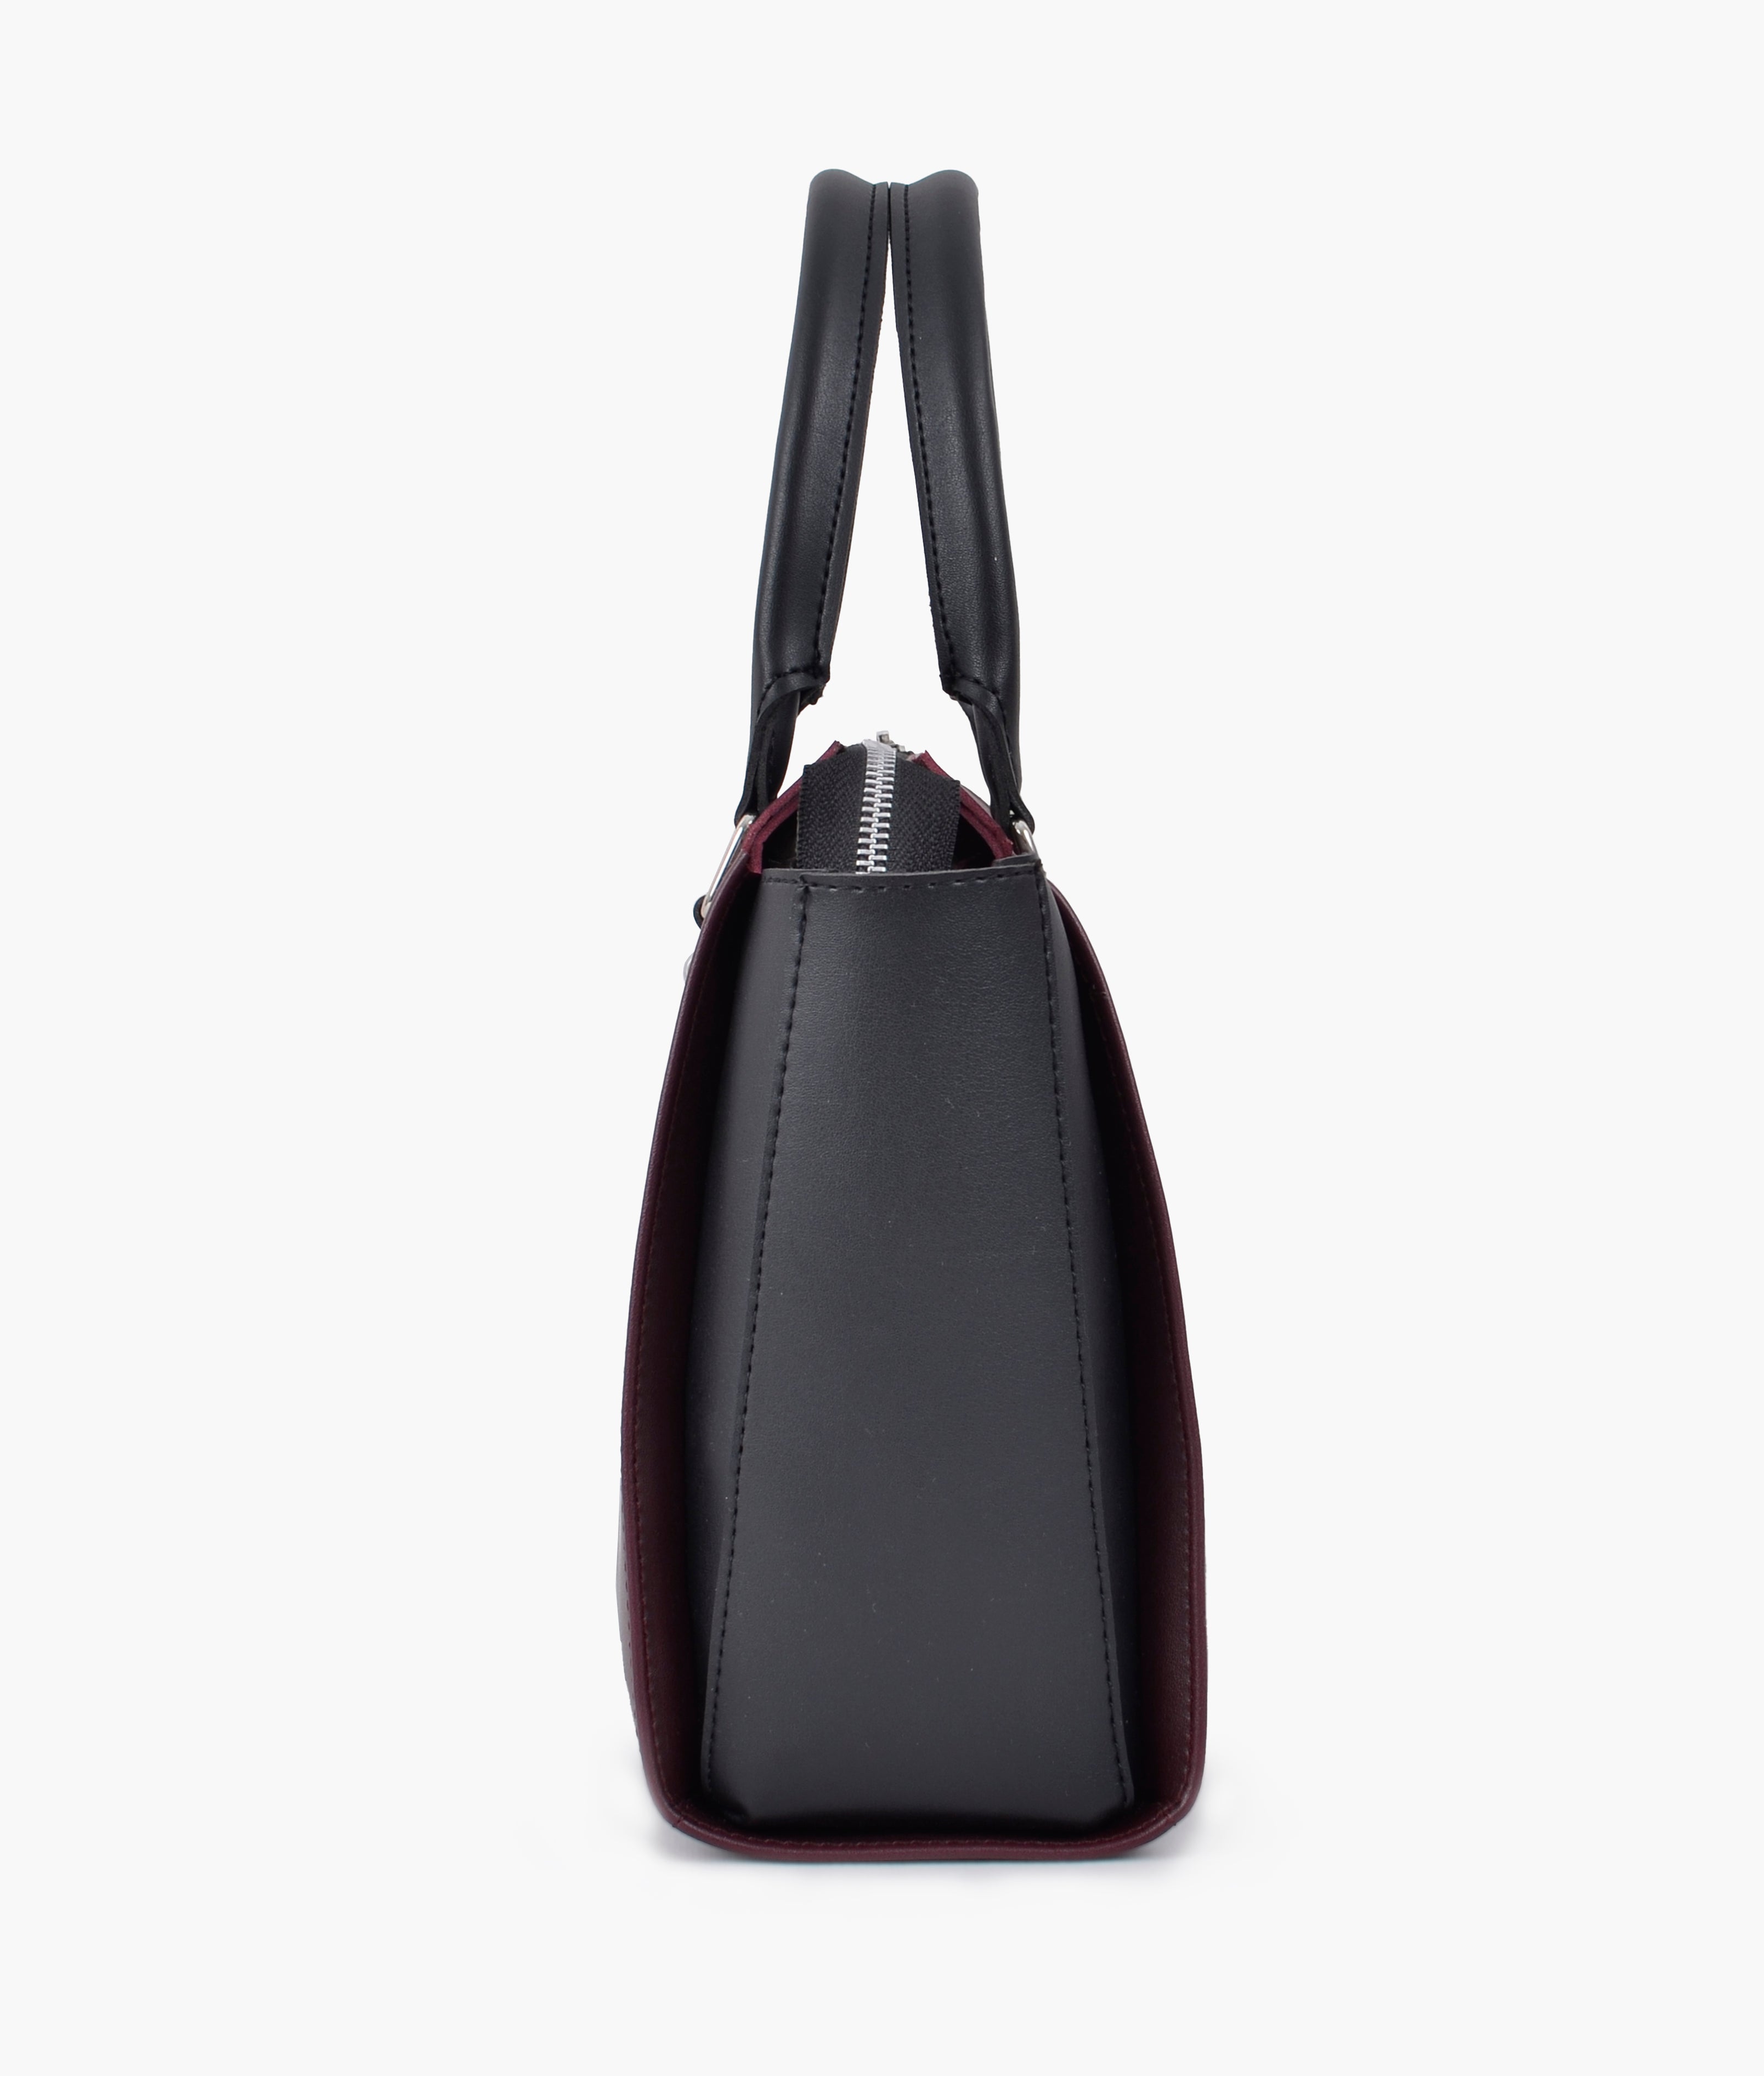 Burgundy classic top-handle bag